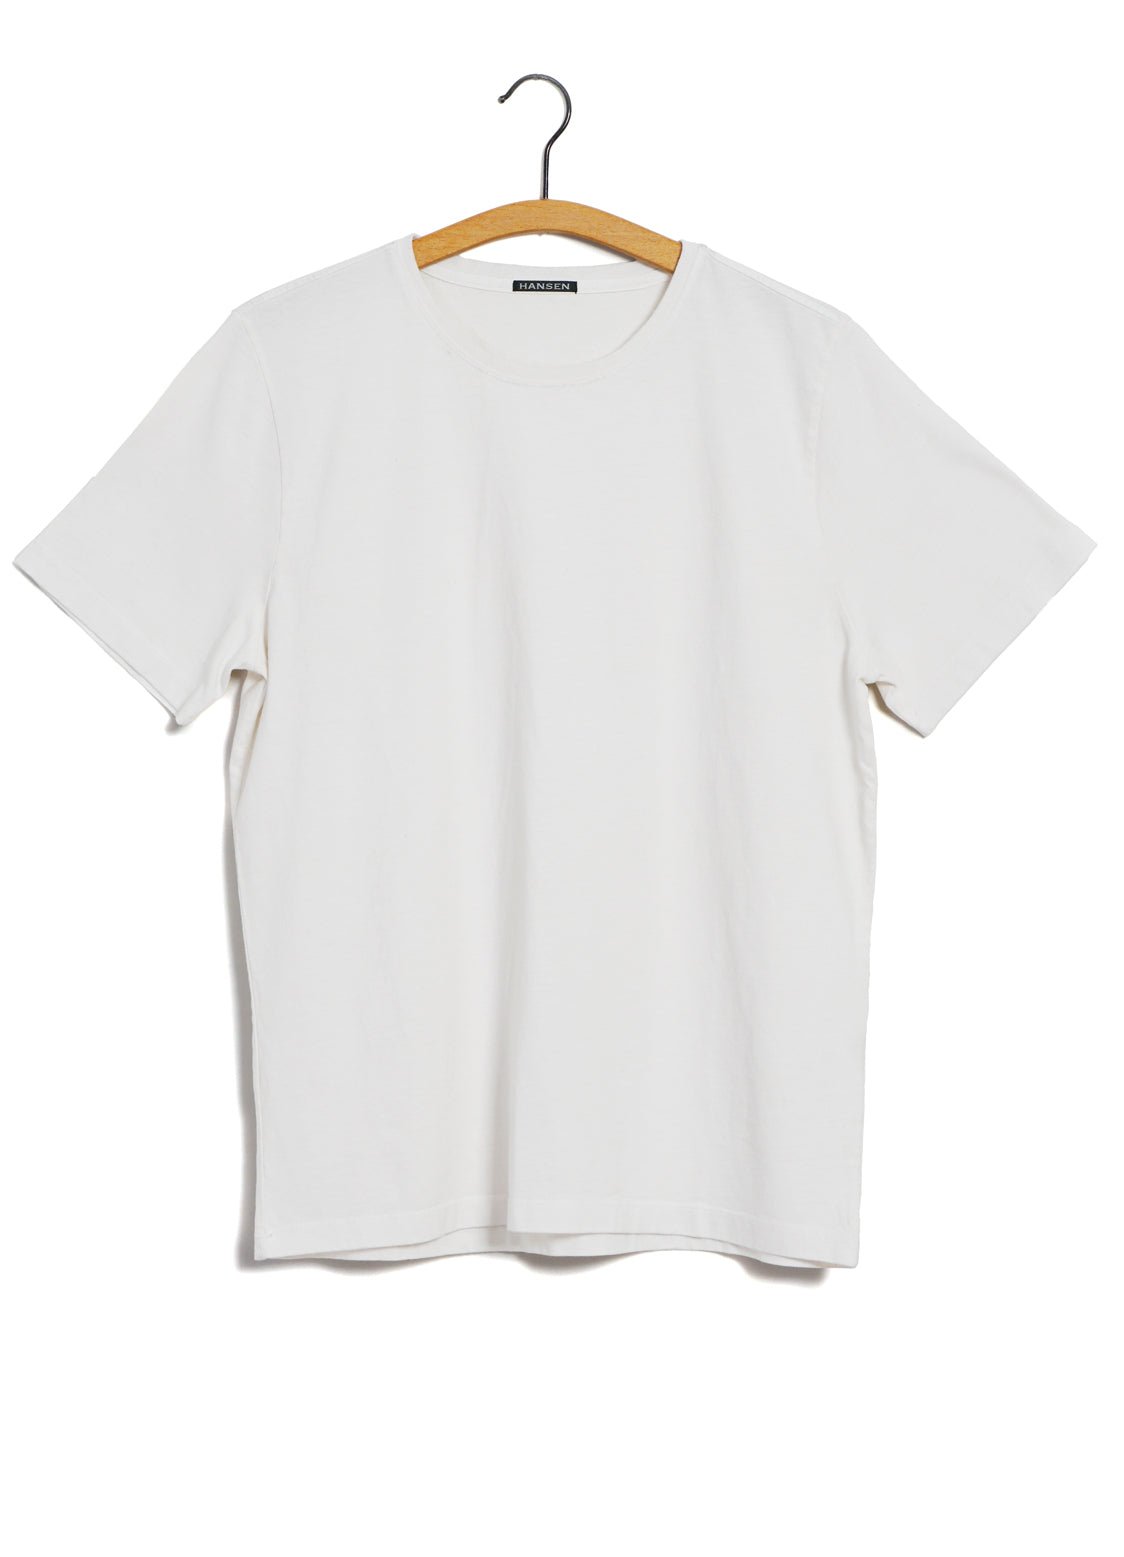 HANSEN GARMENTS - JULIAN | Crew Neck T-Shirt | White - HANSEN Garments